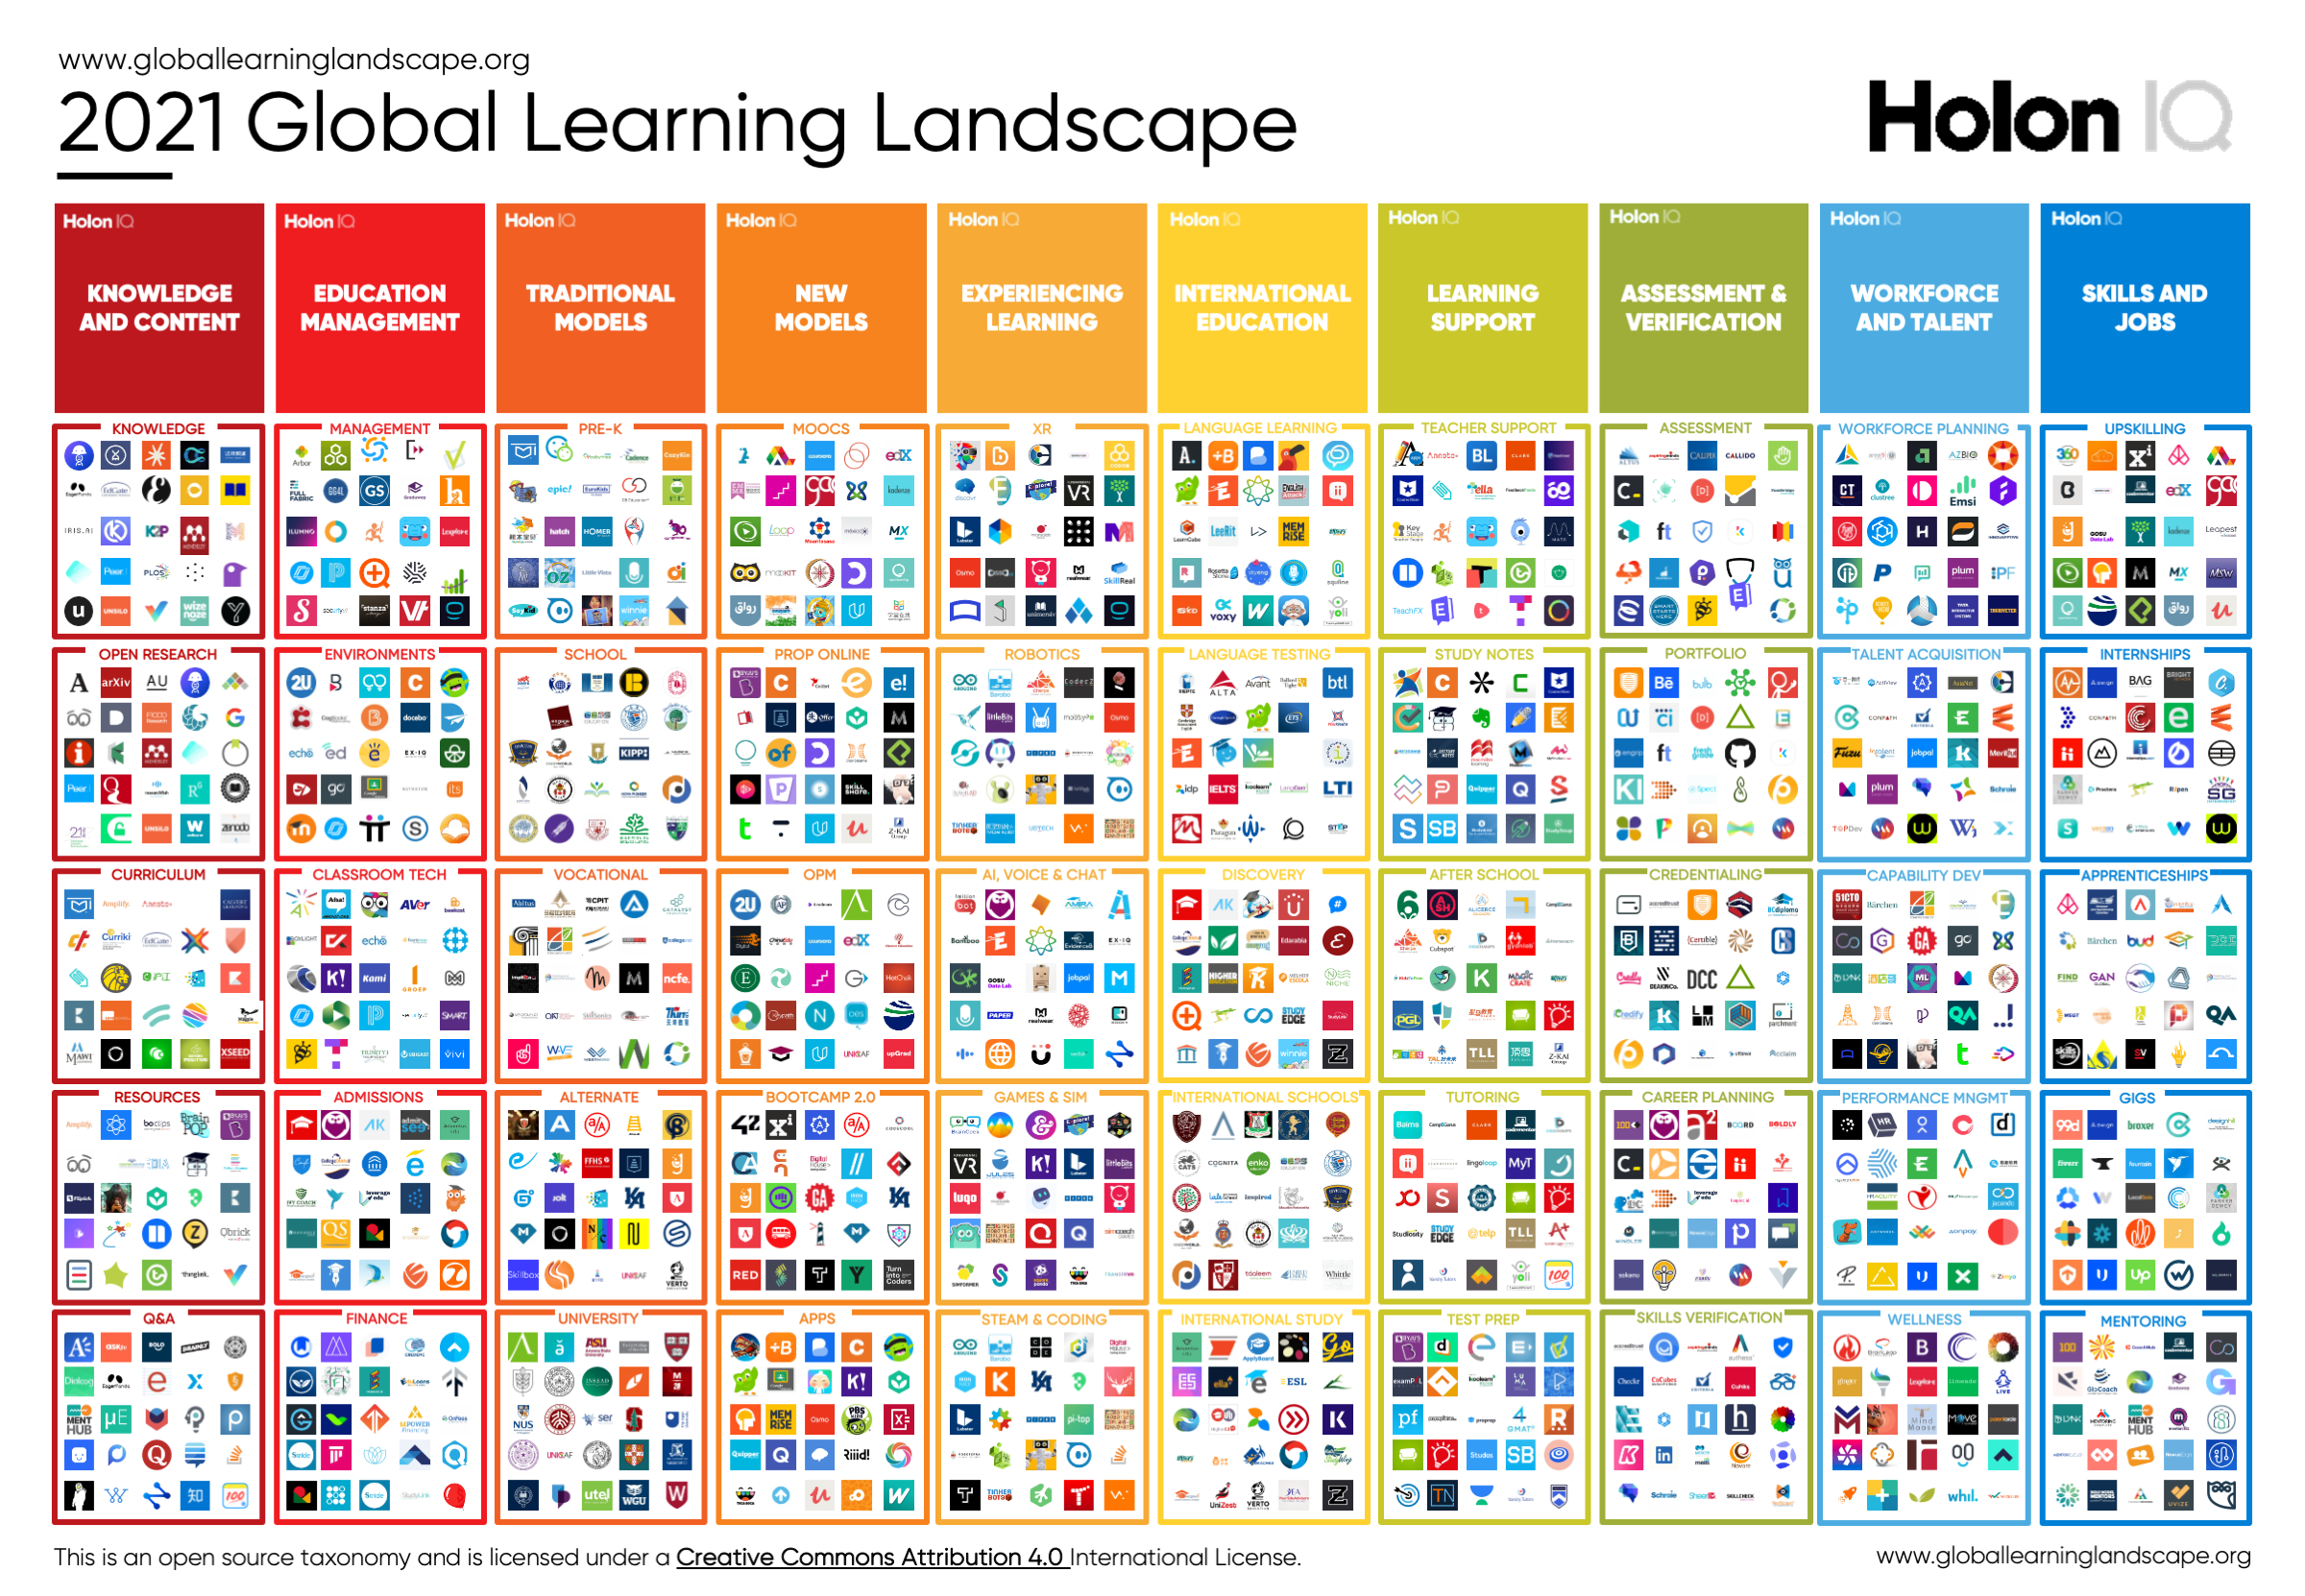 2021 Global Learning Landscape Holoniq, Landscape Mapping App